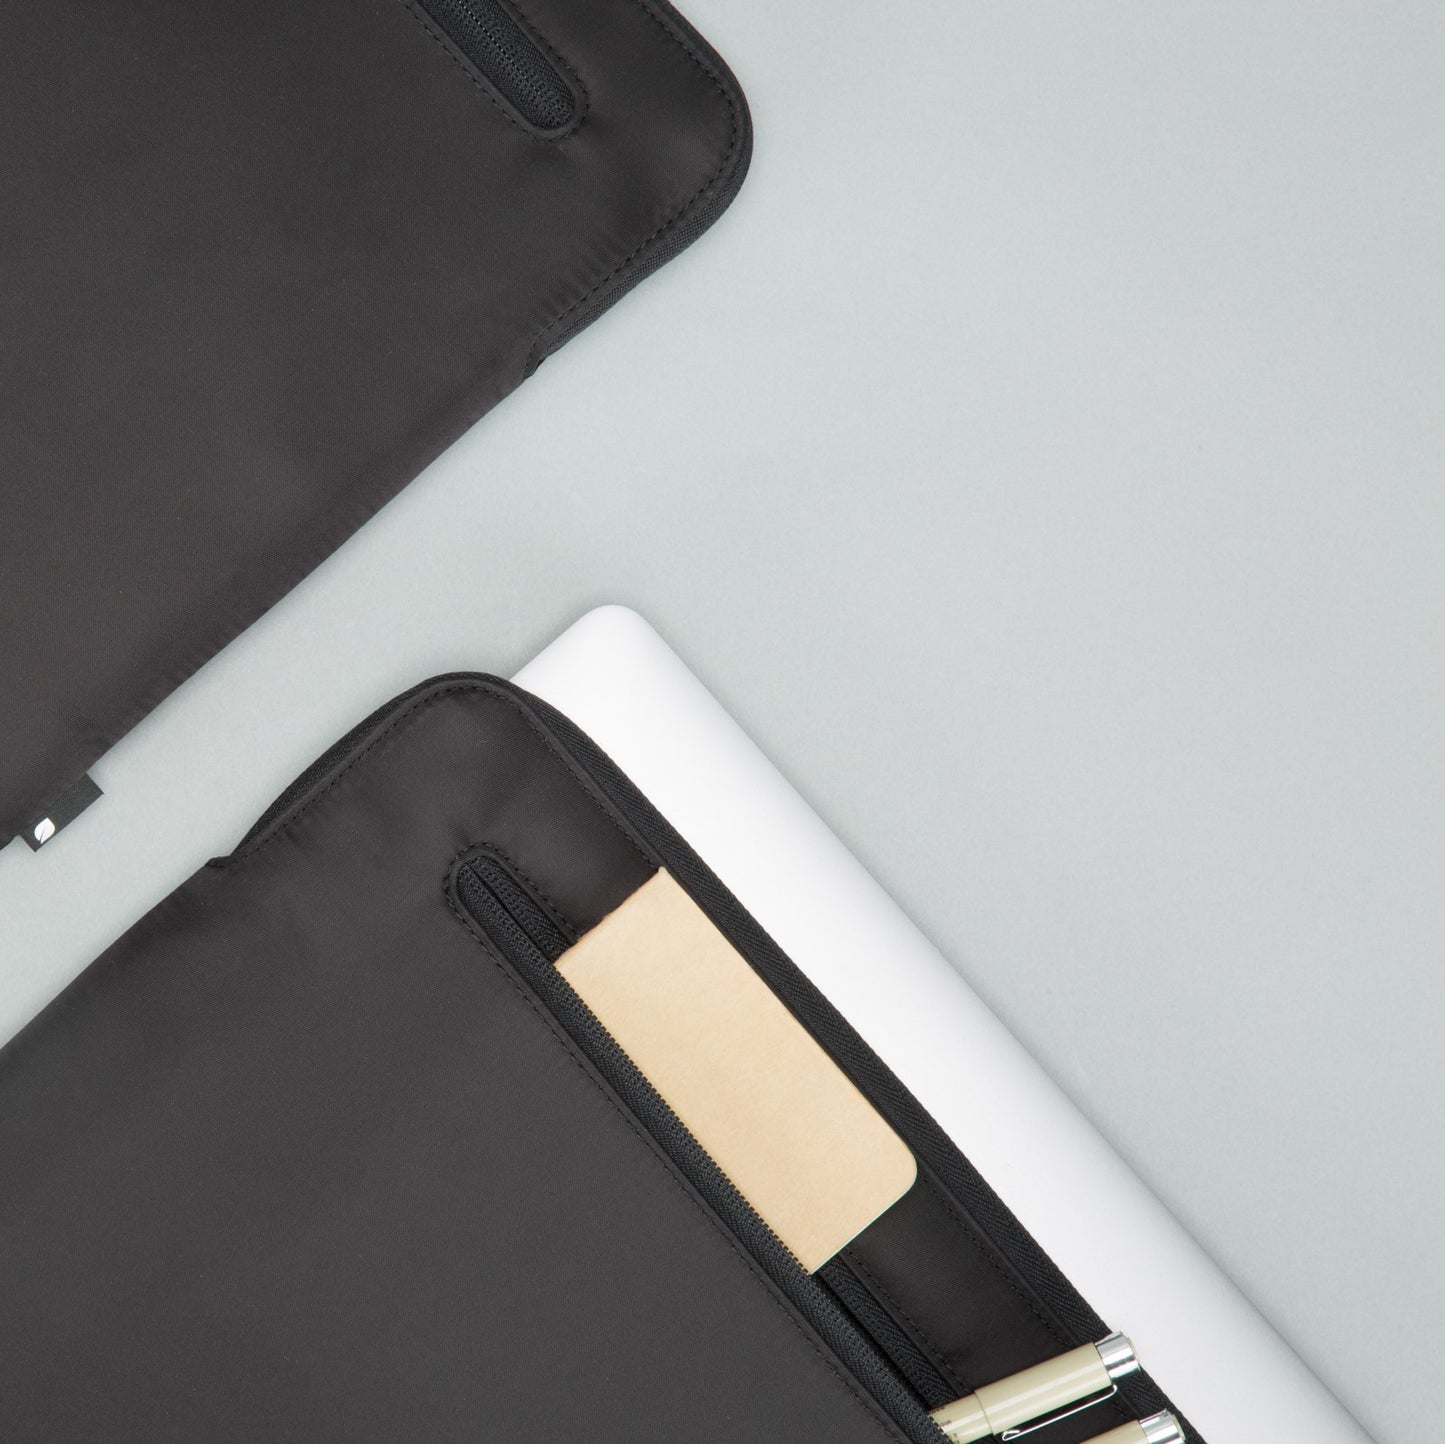 Compact Sleeve in Flight Nylon for  MacBook Pro 13" -Black-